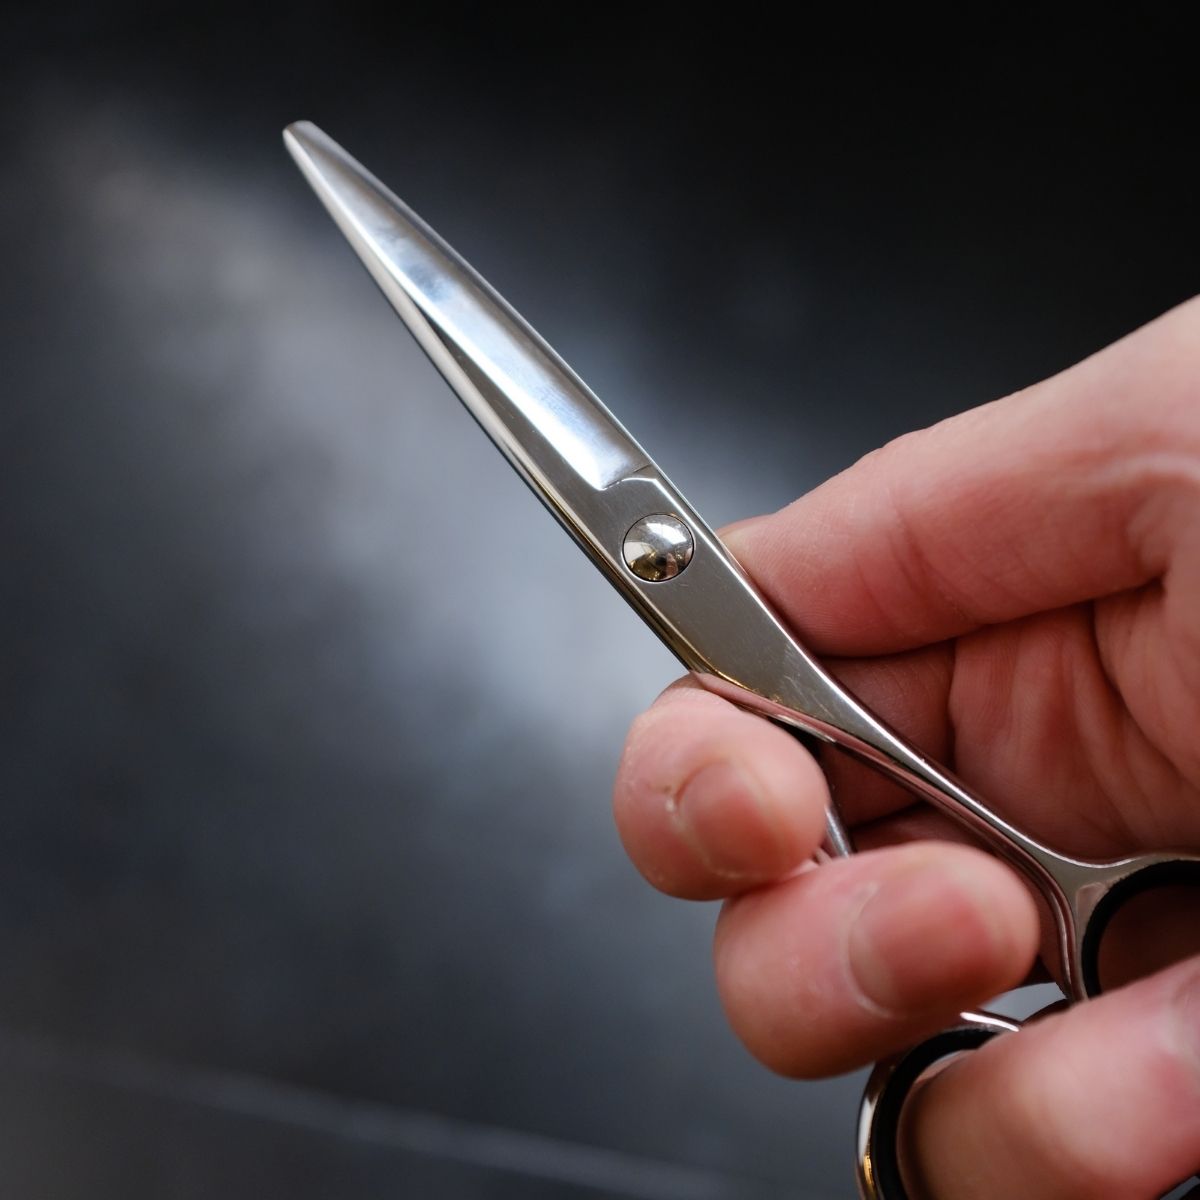 A left handed scissor handle design